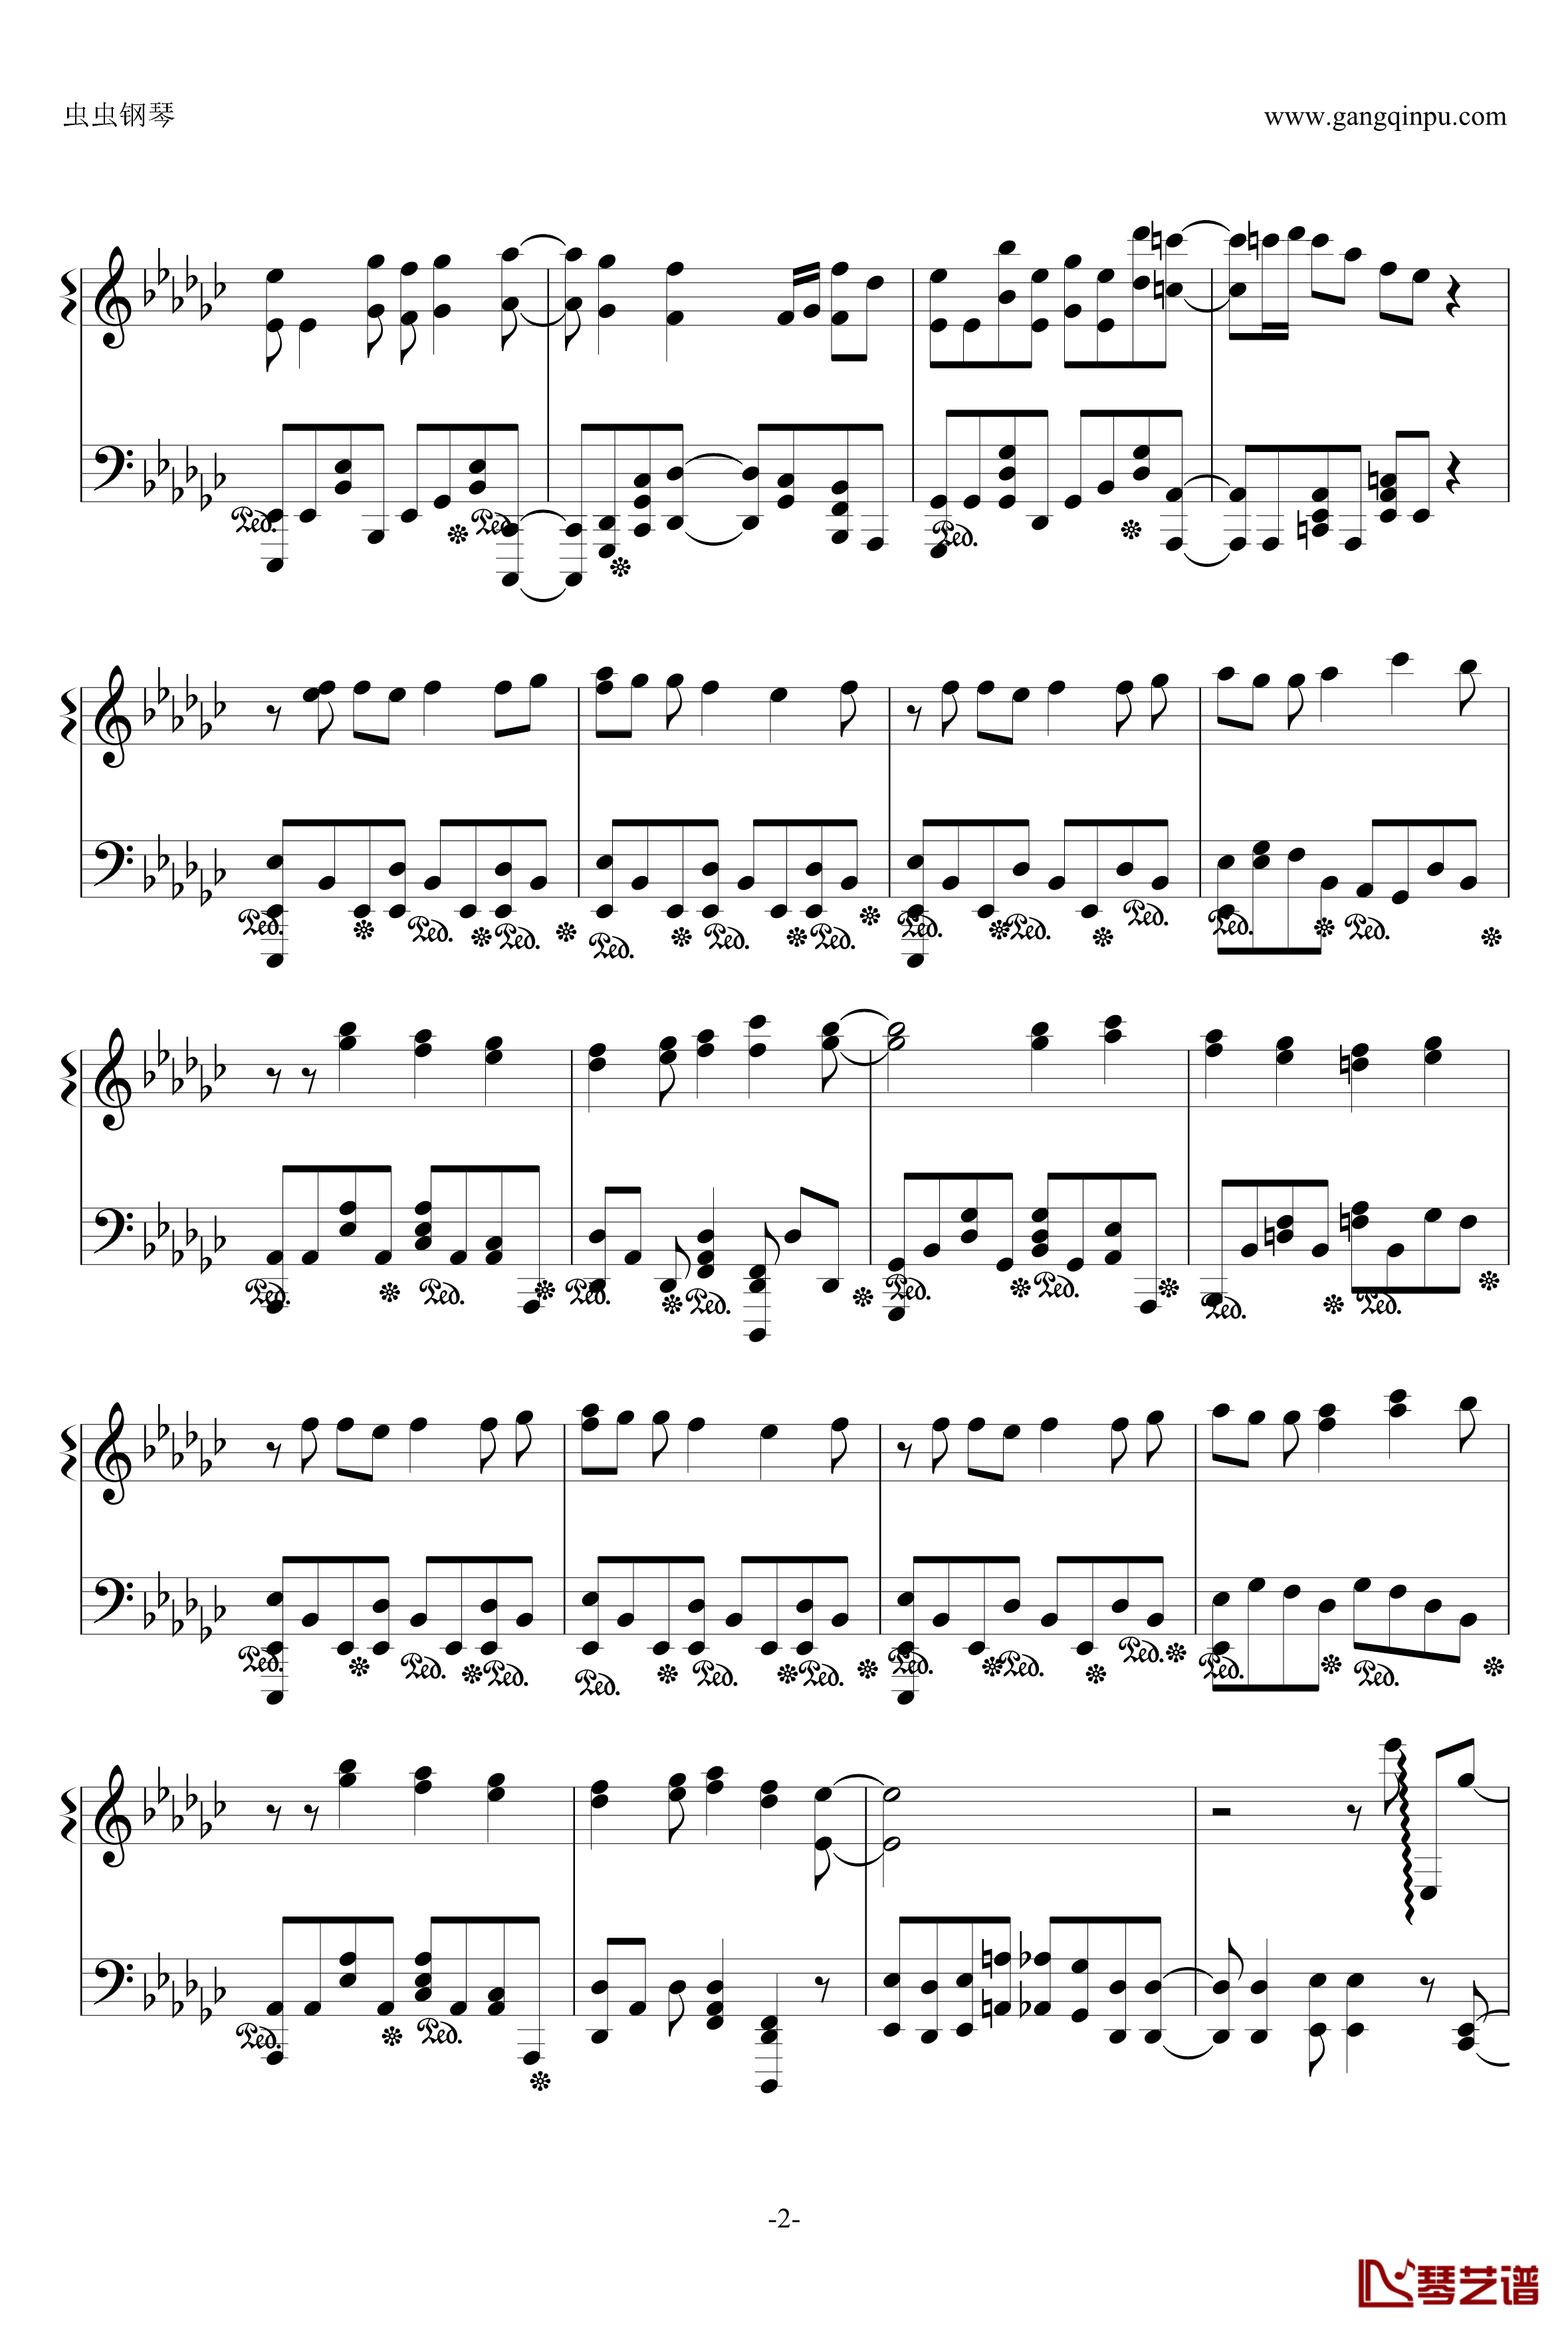 脱獄钢琴谱 by Neru- 鏡音リン-鏡音リン2